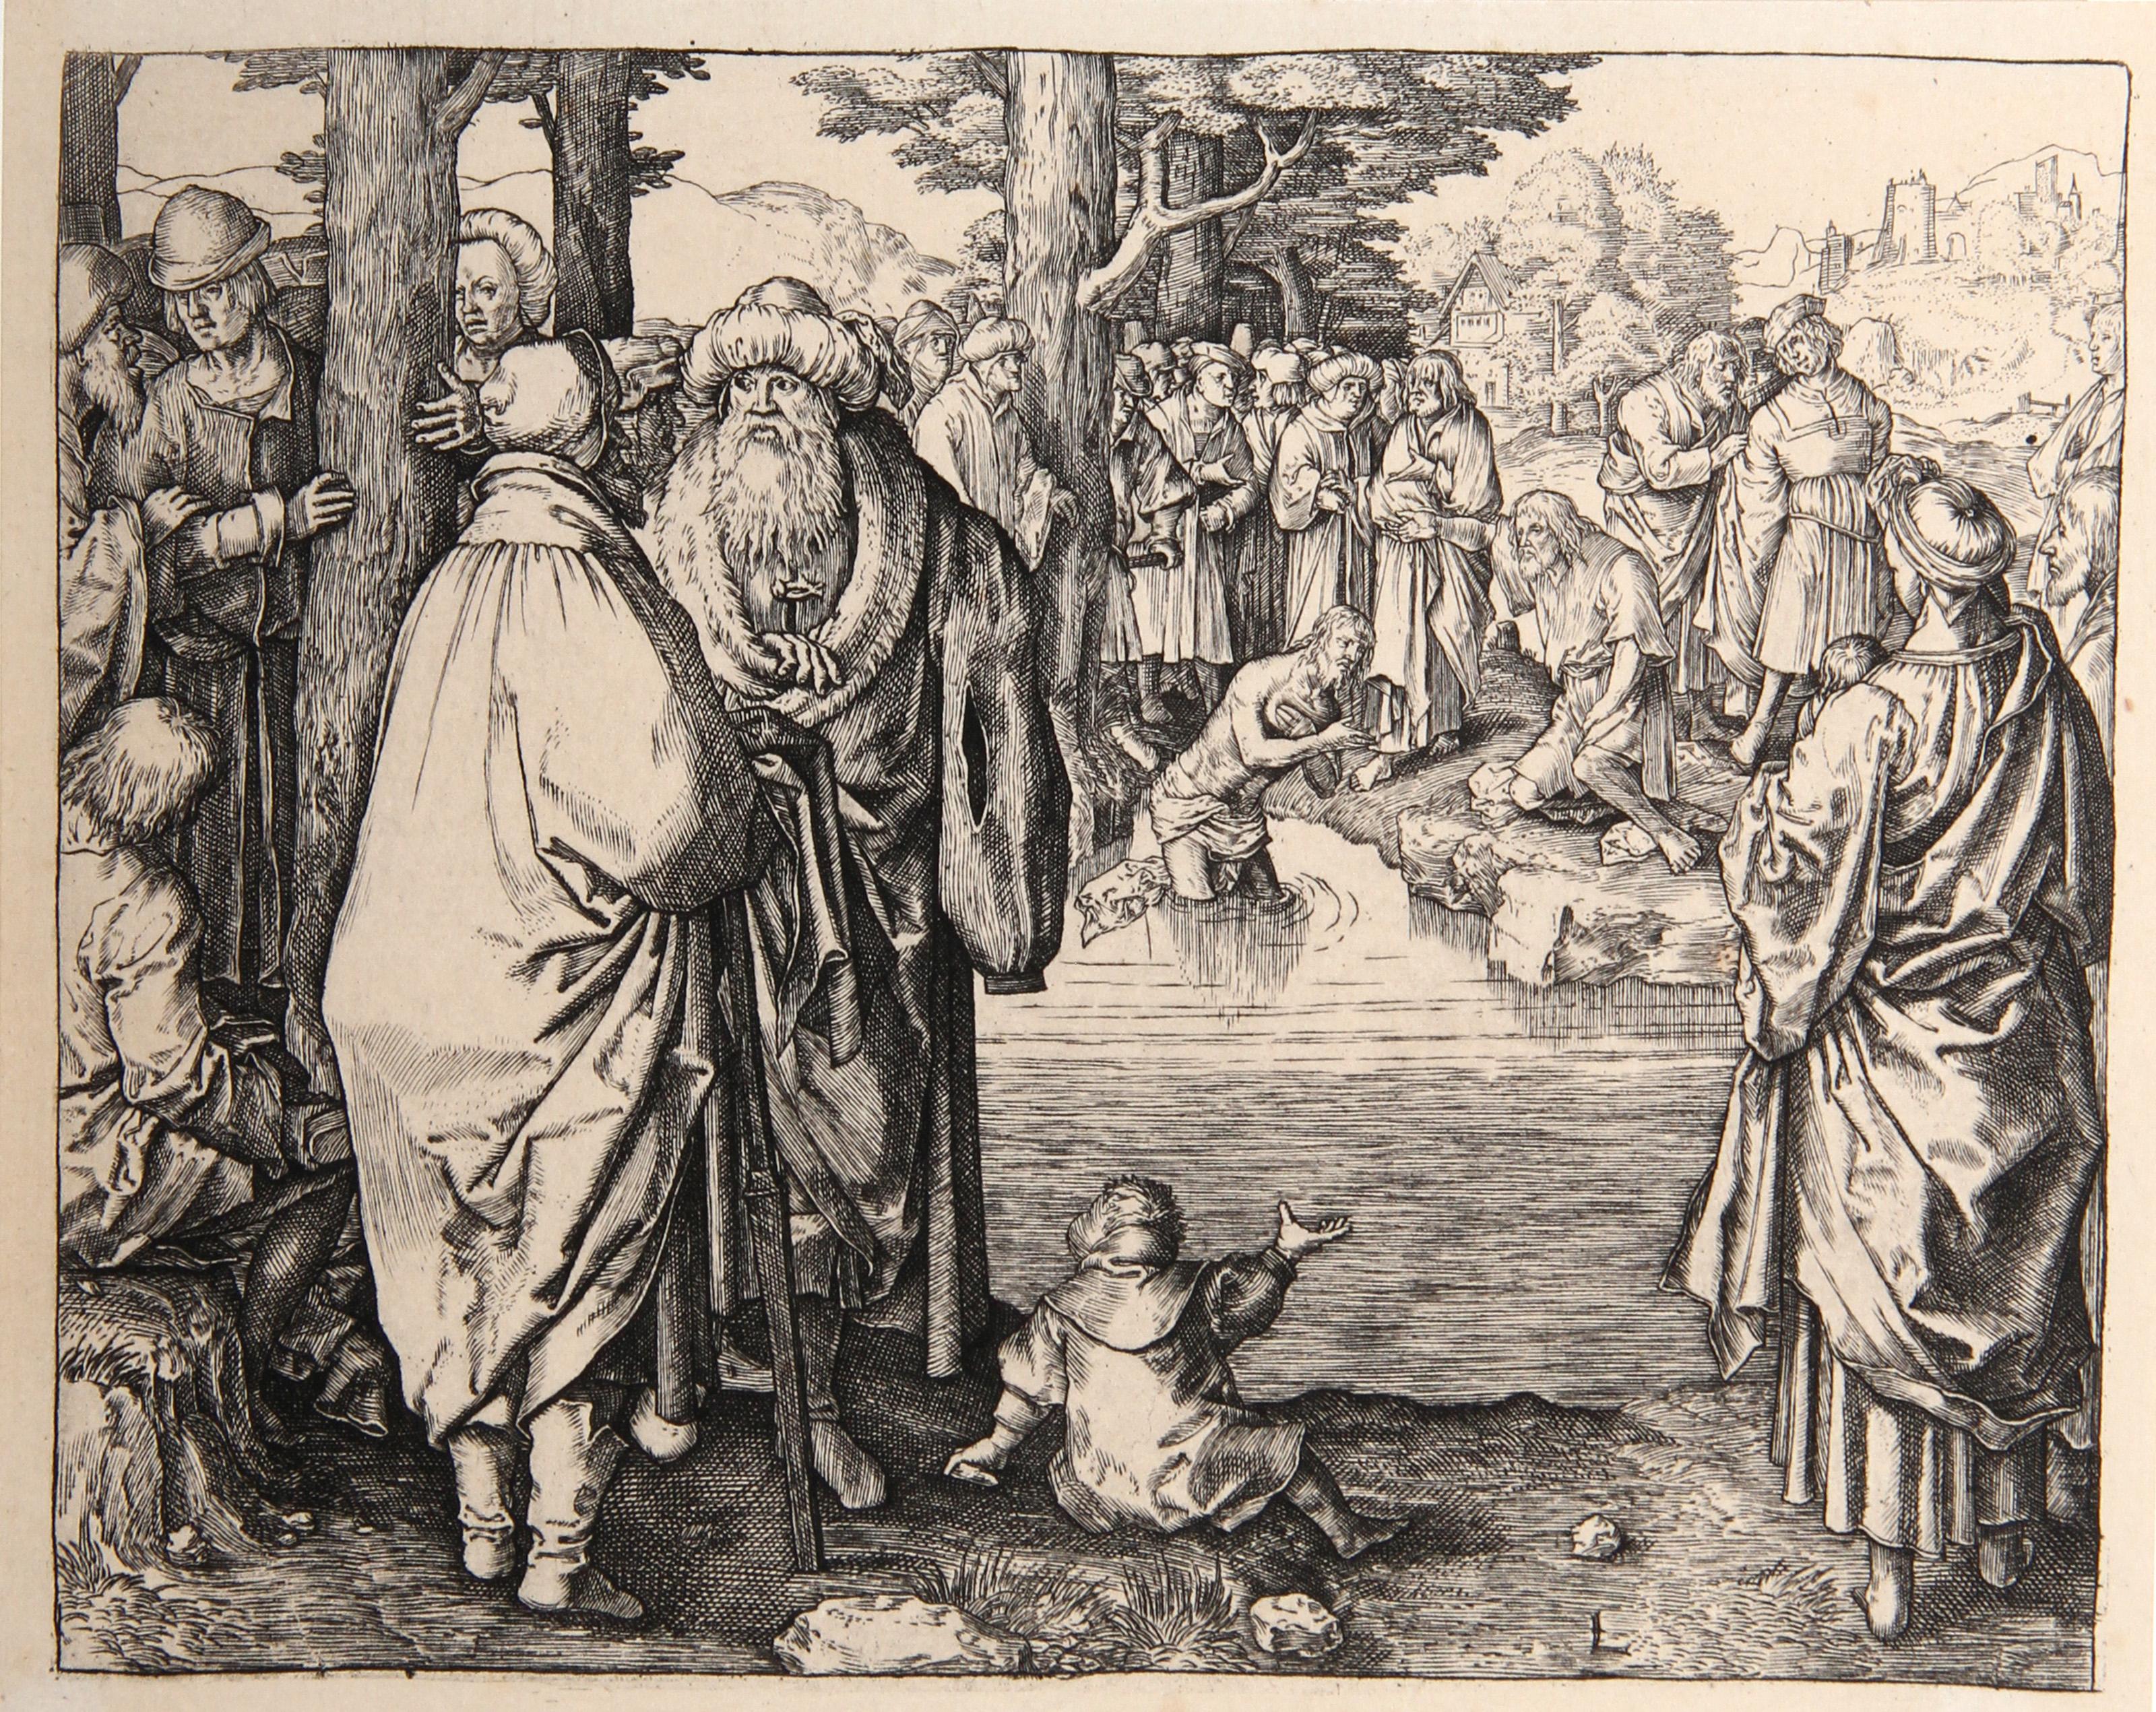 Artist: Lucas van Leyden, After by Amand Durand, Dutch (1494 - 1533) - Le Bapteme de Jesus Christ, Year: 1873, Medium: Heliogravure, Size: 6.25  x 7.5 in. (15.88  x 19.05 cm), Printer: Amand Durand, Description: French Engraver and painter Charles